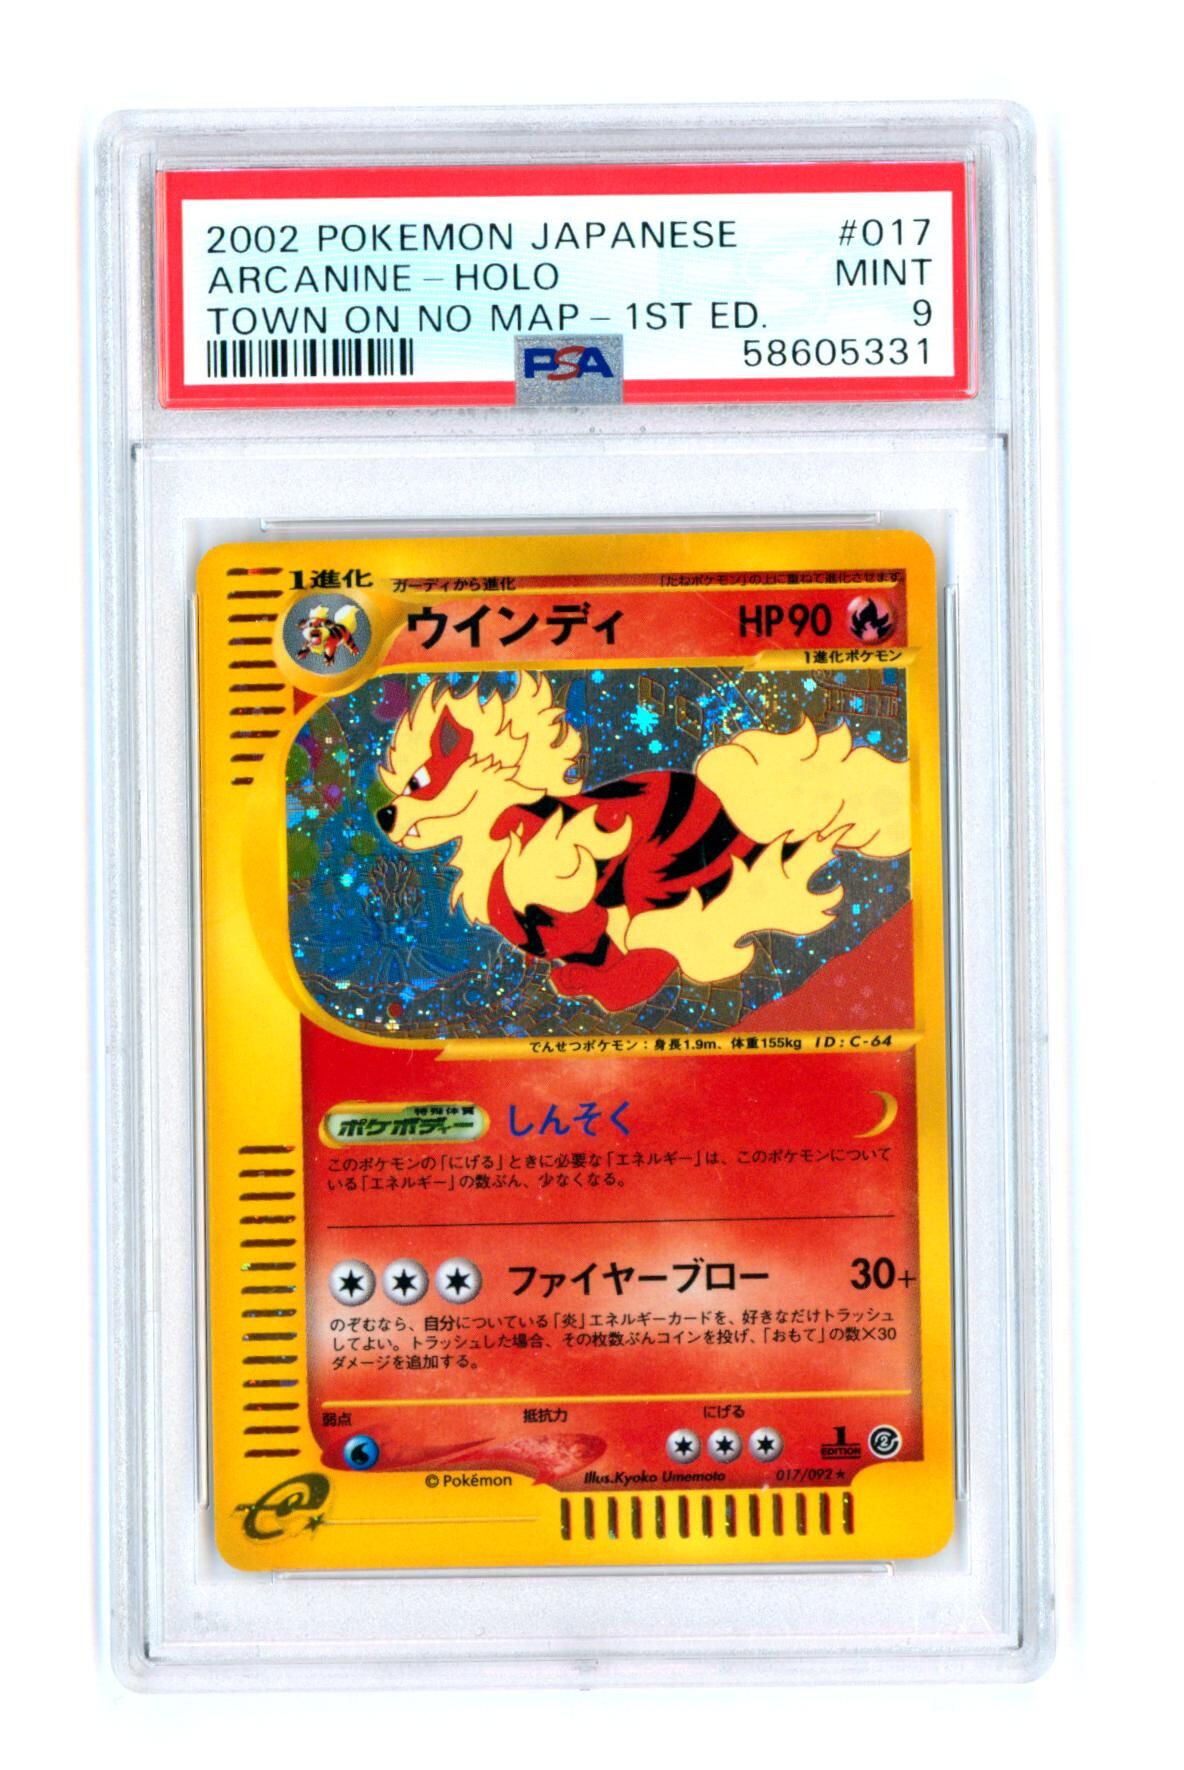 Arcanine 017/092 - Town on no map 1ST ED. - Japanese - Holo - PSA 9 MINT - Pokémon